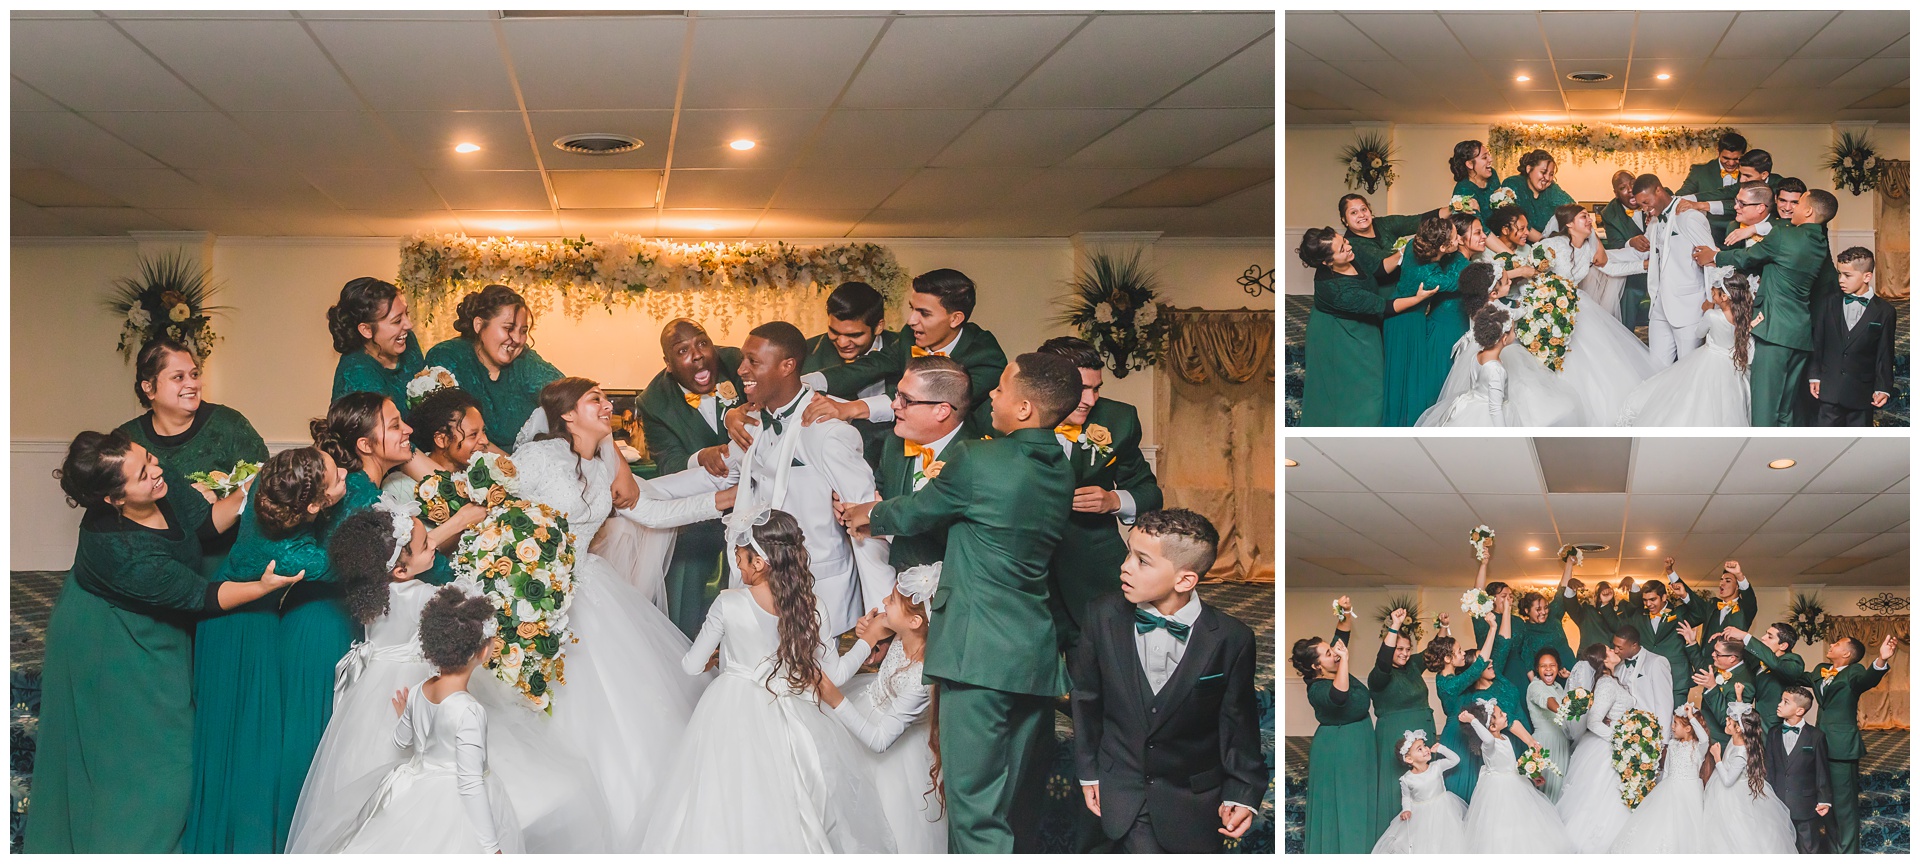 Wedding photography at Apostolic Revival Church by Kansas City wedding photographers Wisdom-Watson Weddings.